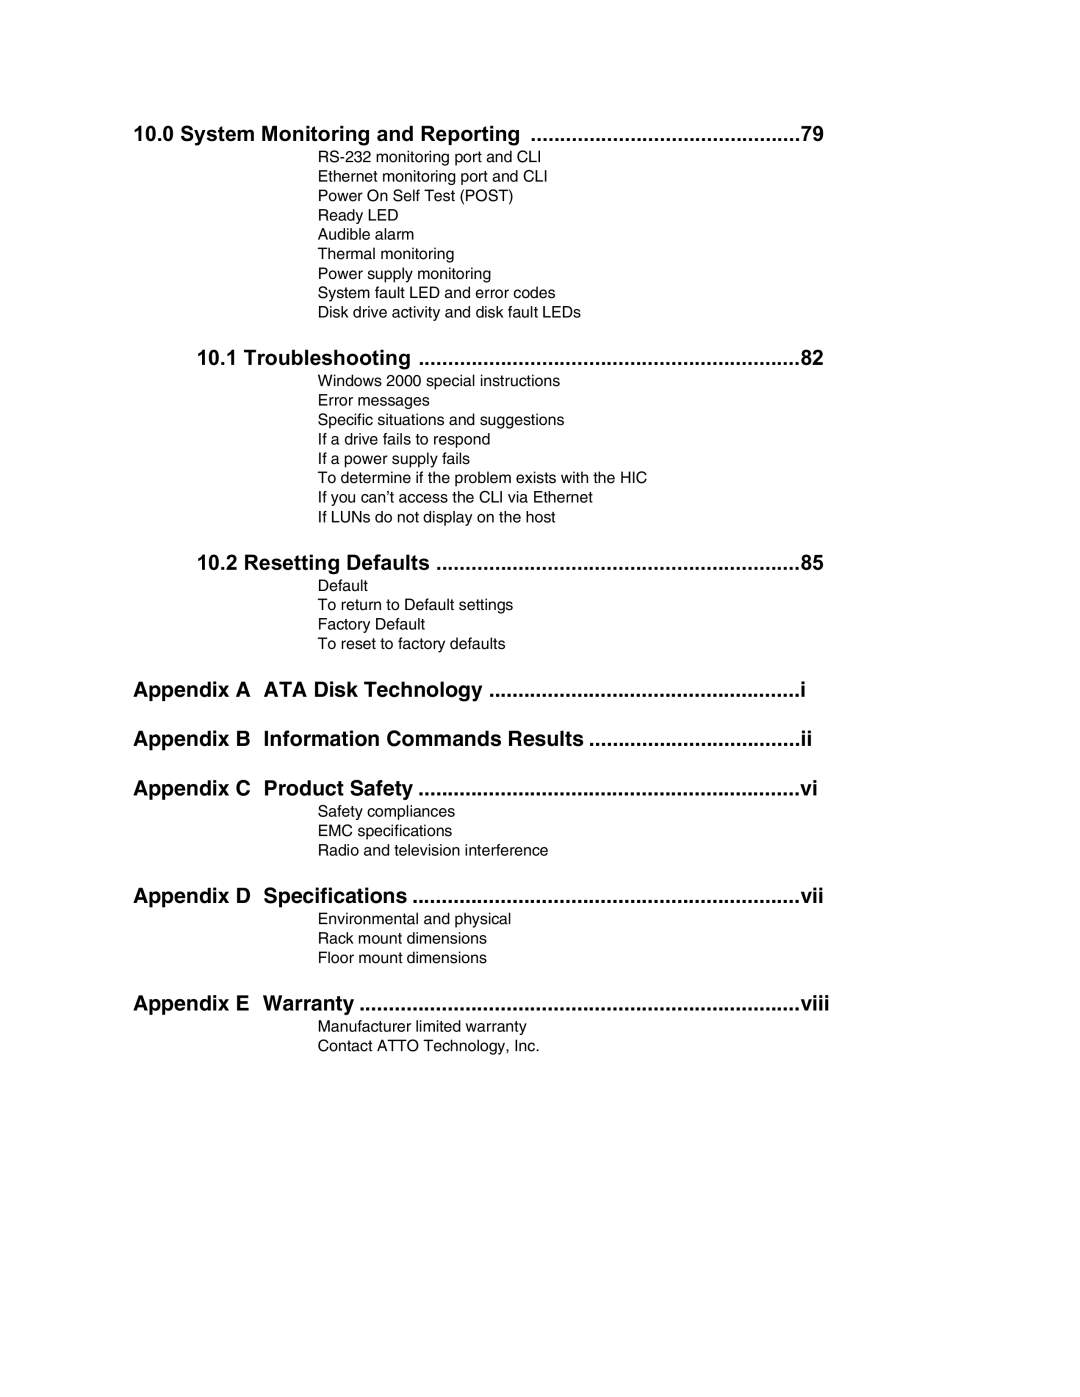 ATTO Technology S-Class manual Appendix D Specifications Vii, Appendix E Warranty Viii 